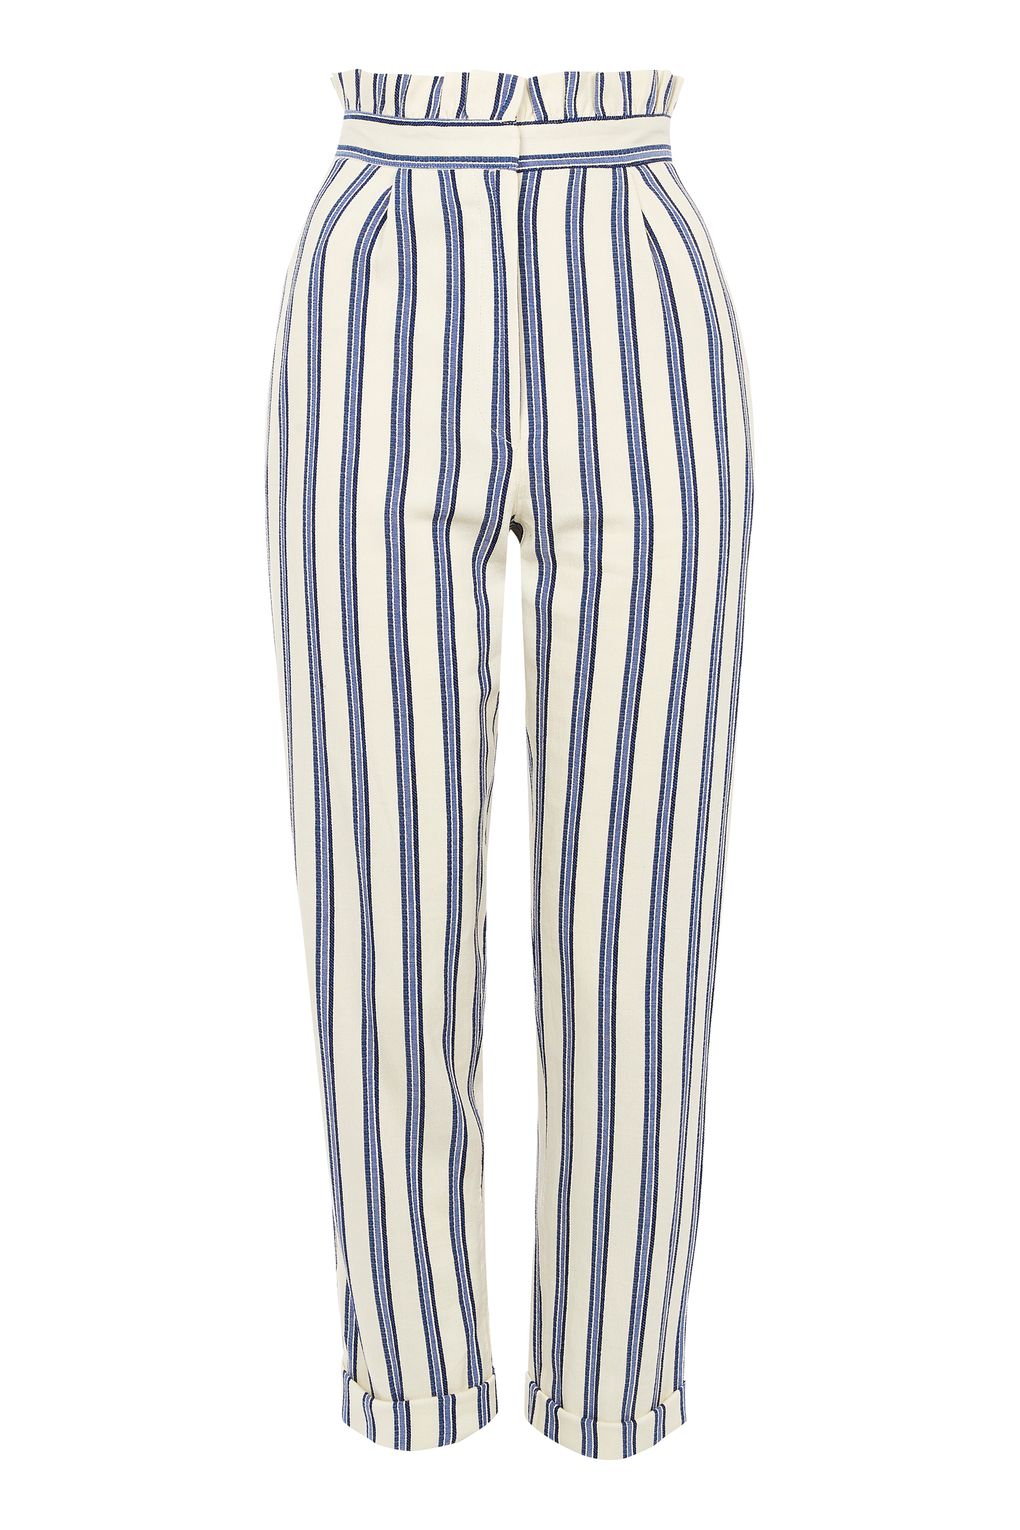 Topshop Stripe Ruffle Peg Trousers